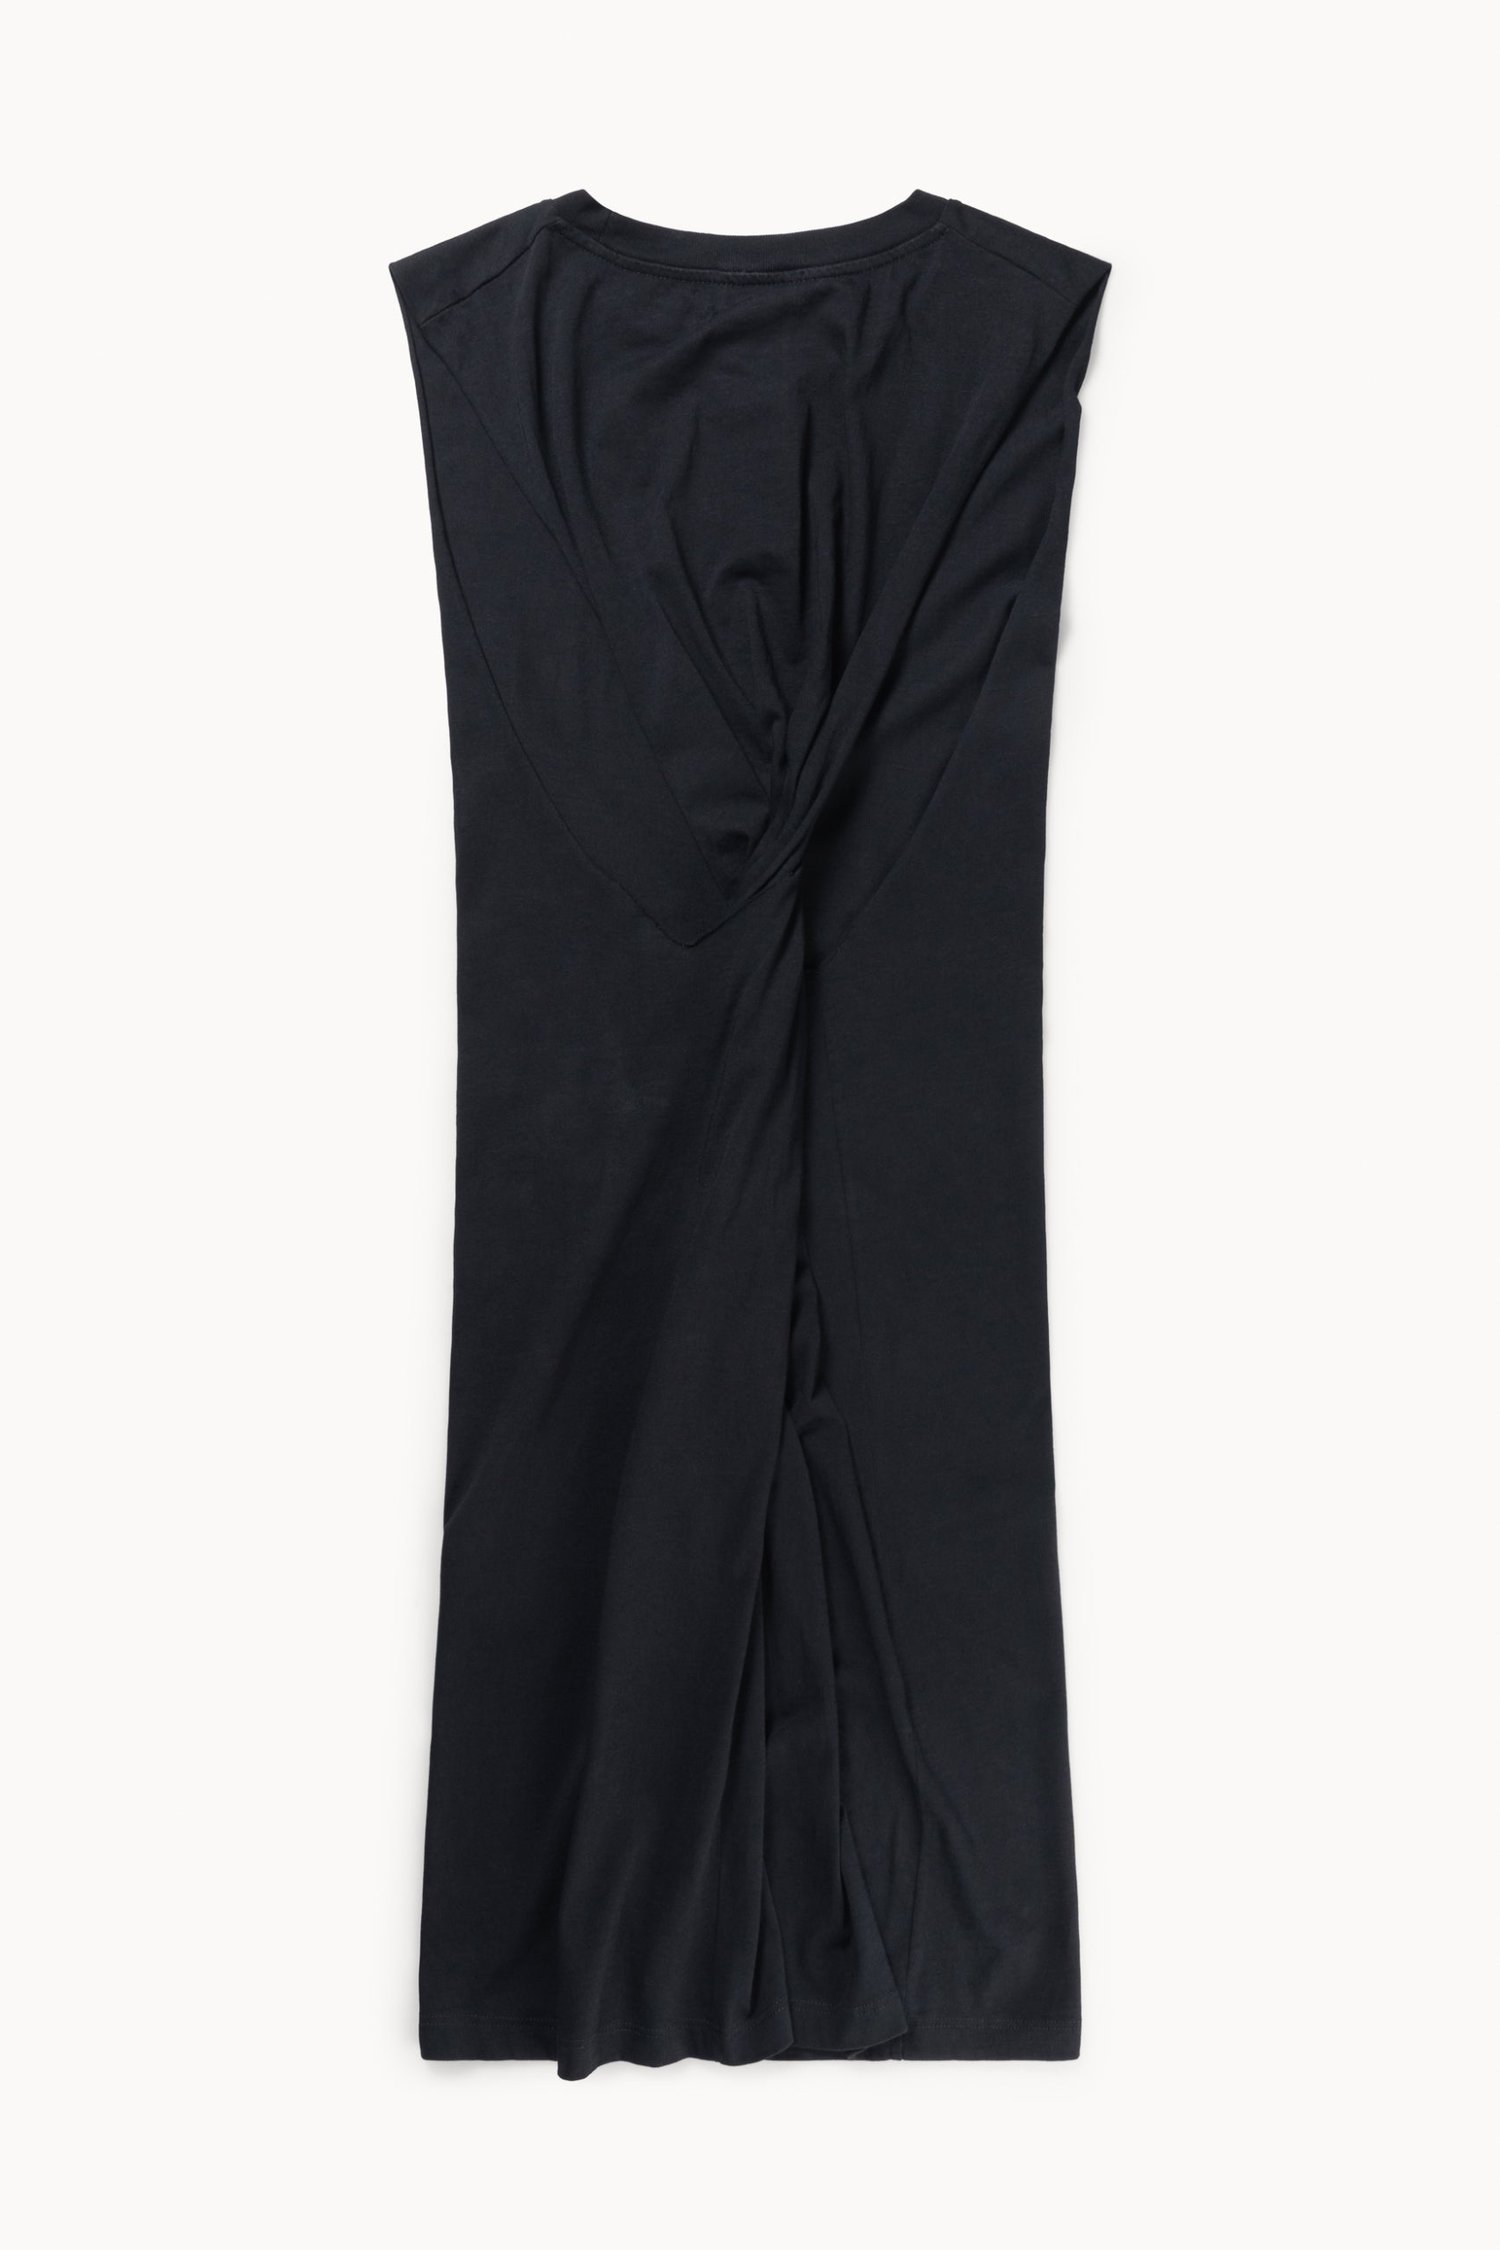 Image of ARIES ARISE TWISTED VEST DRESS BLACK